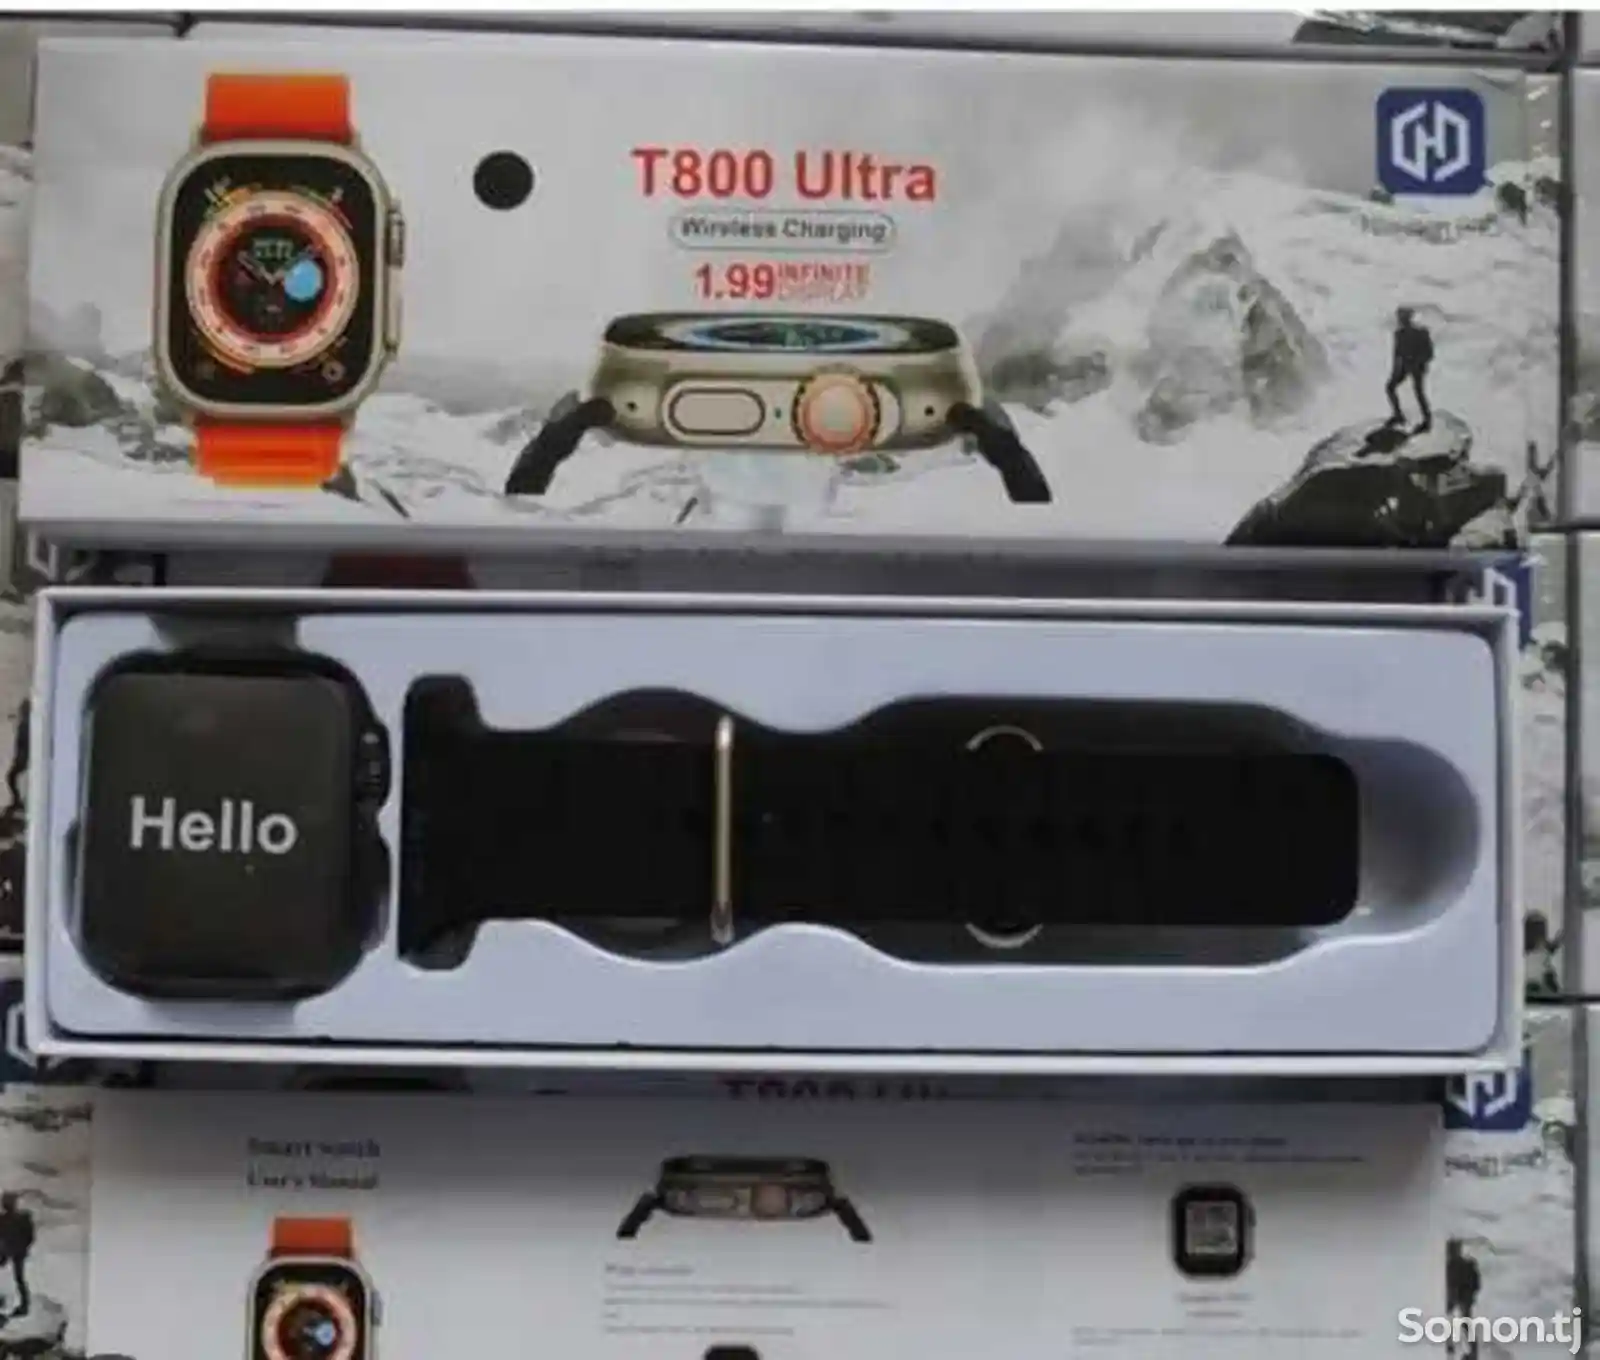 Смарт часы Smart Watch T800 Ultra-4